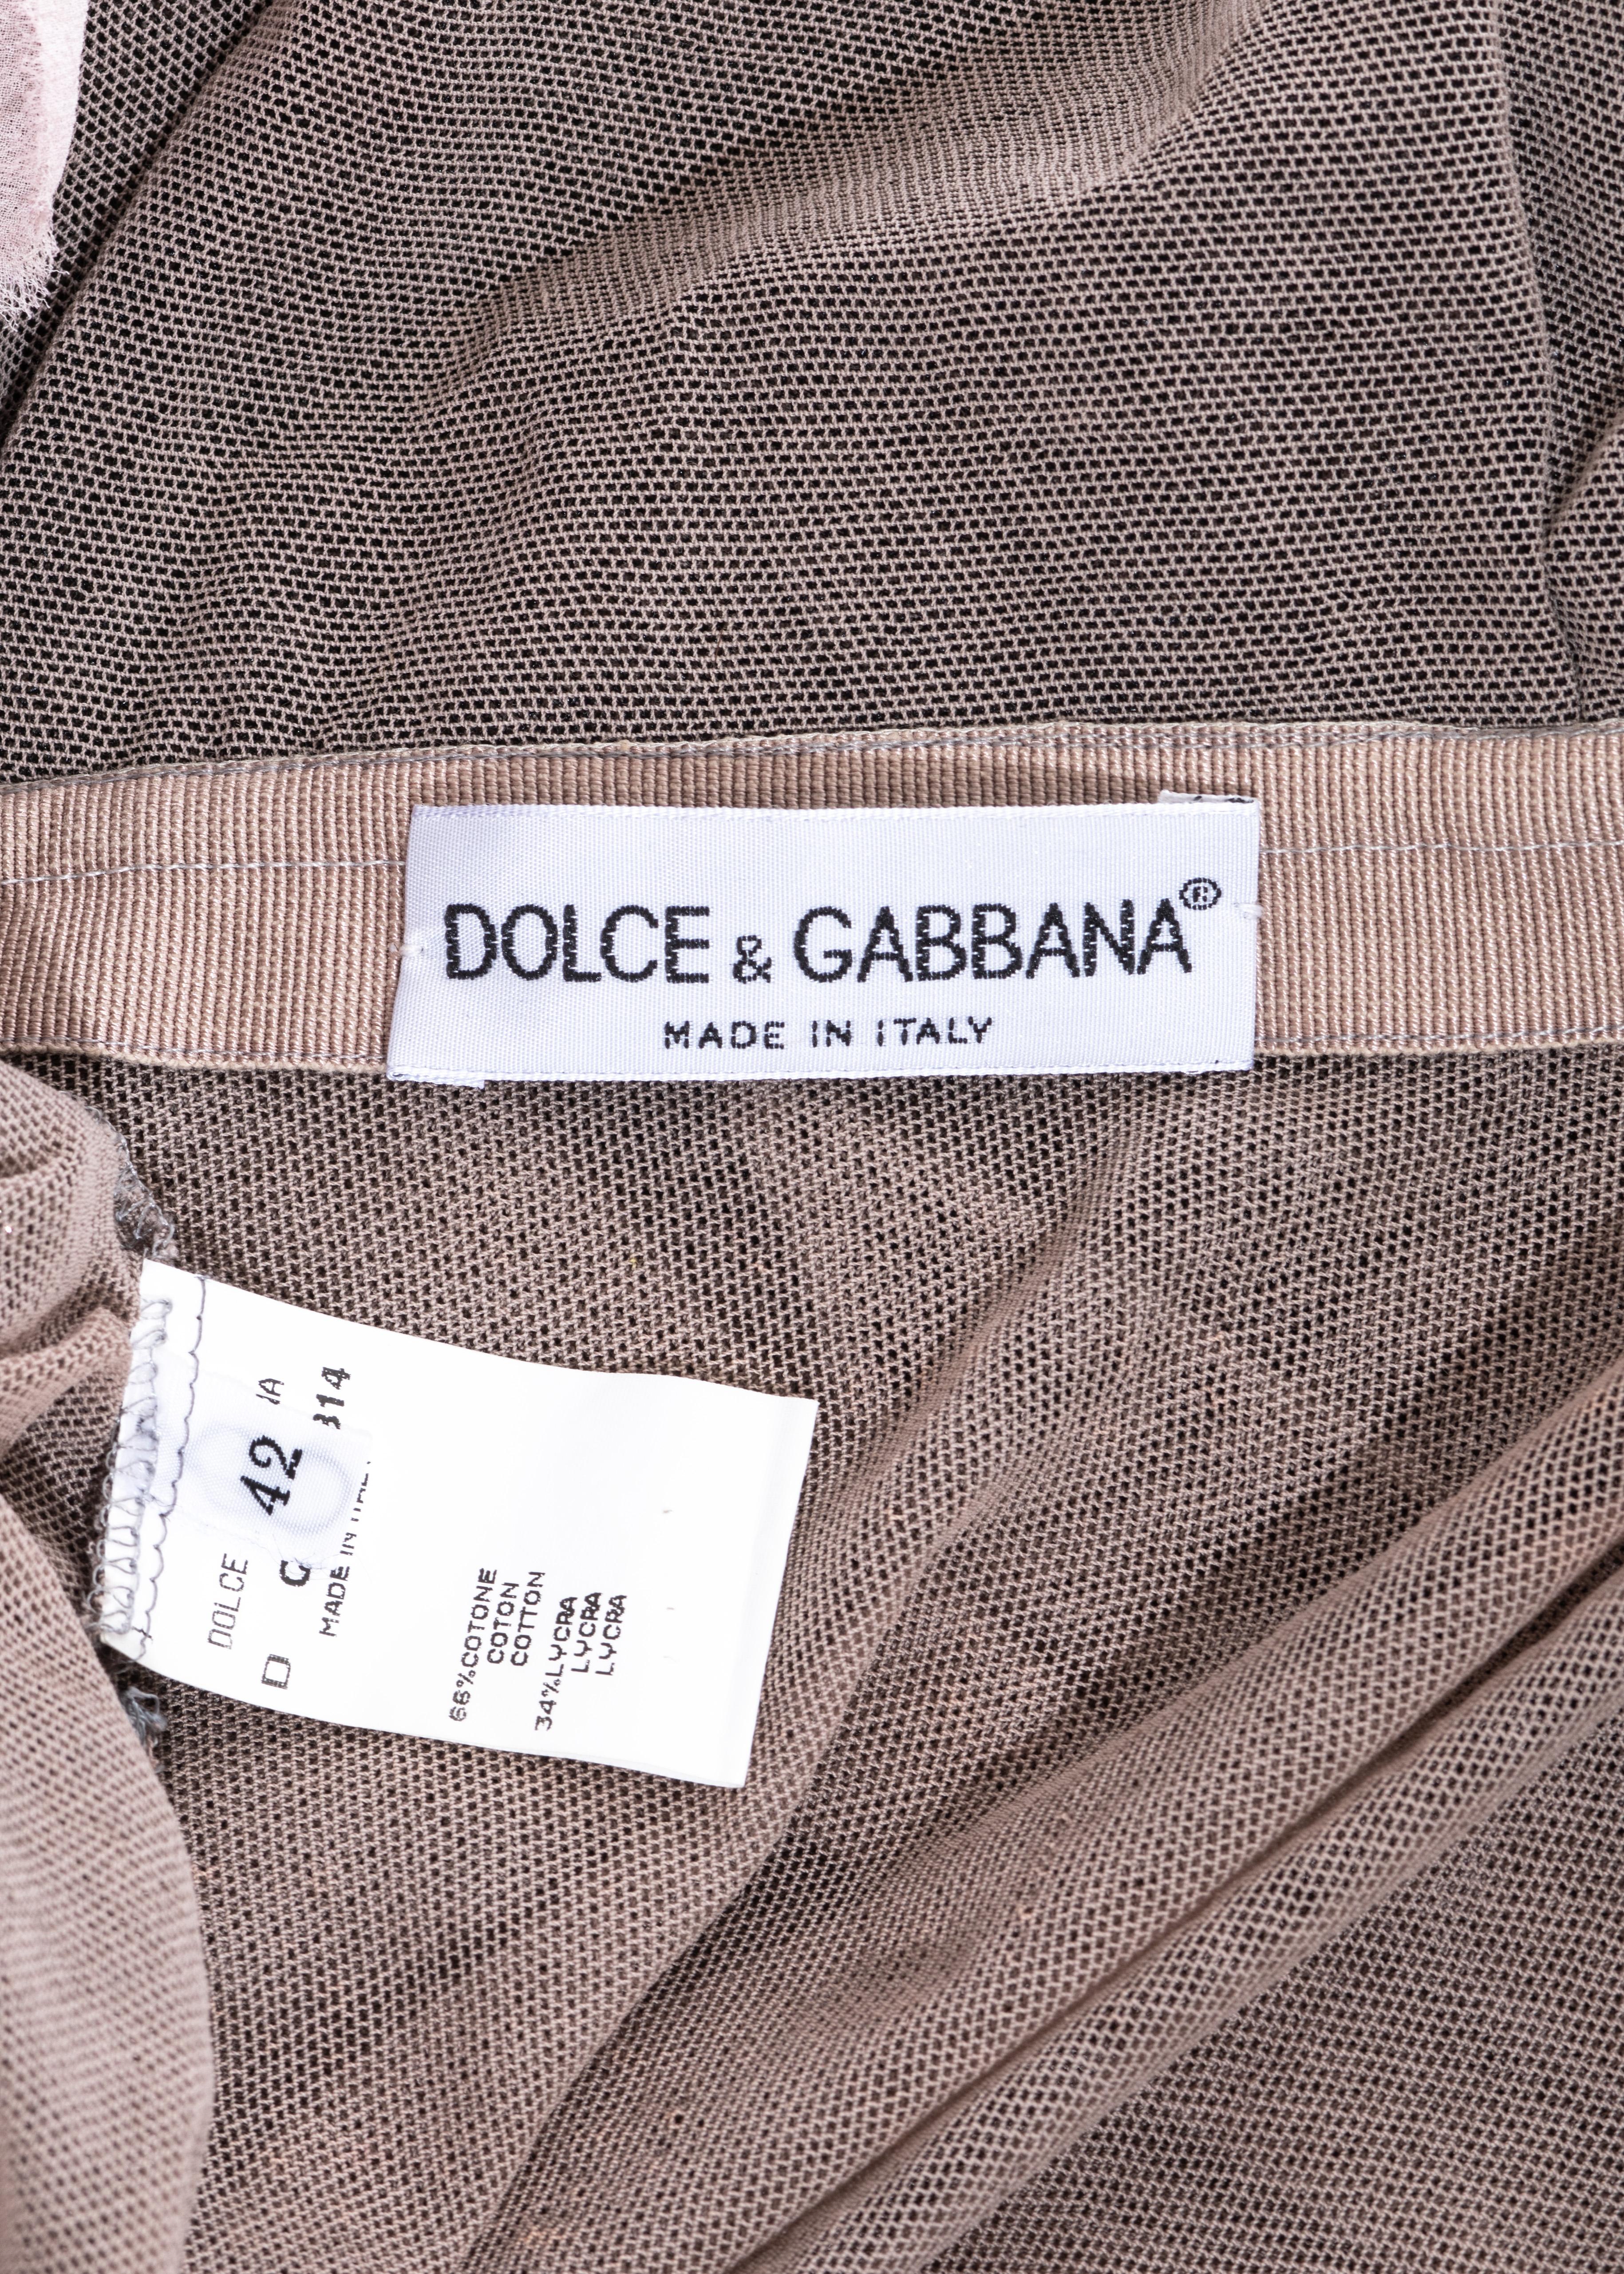 Dolce & Gabbana mauve mesh evening coat dress with floral motifs, ss 1998 For Sale 4